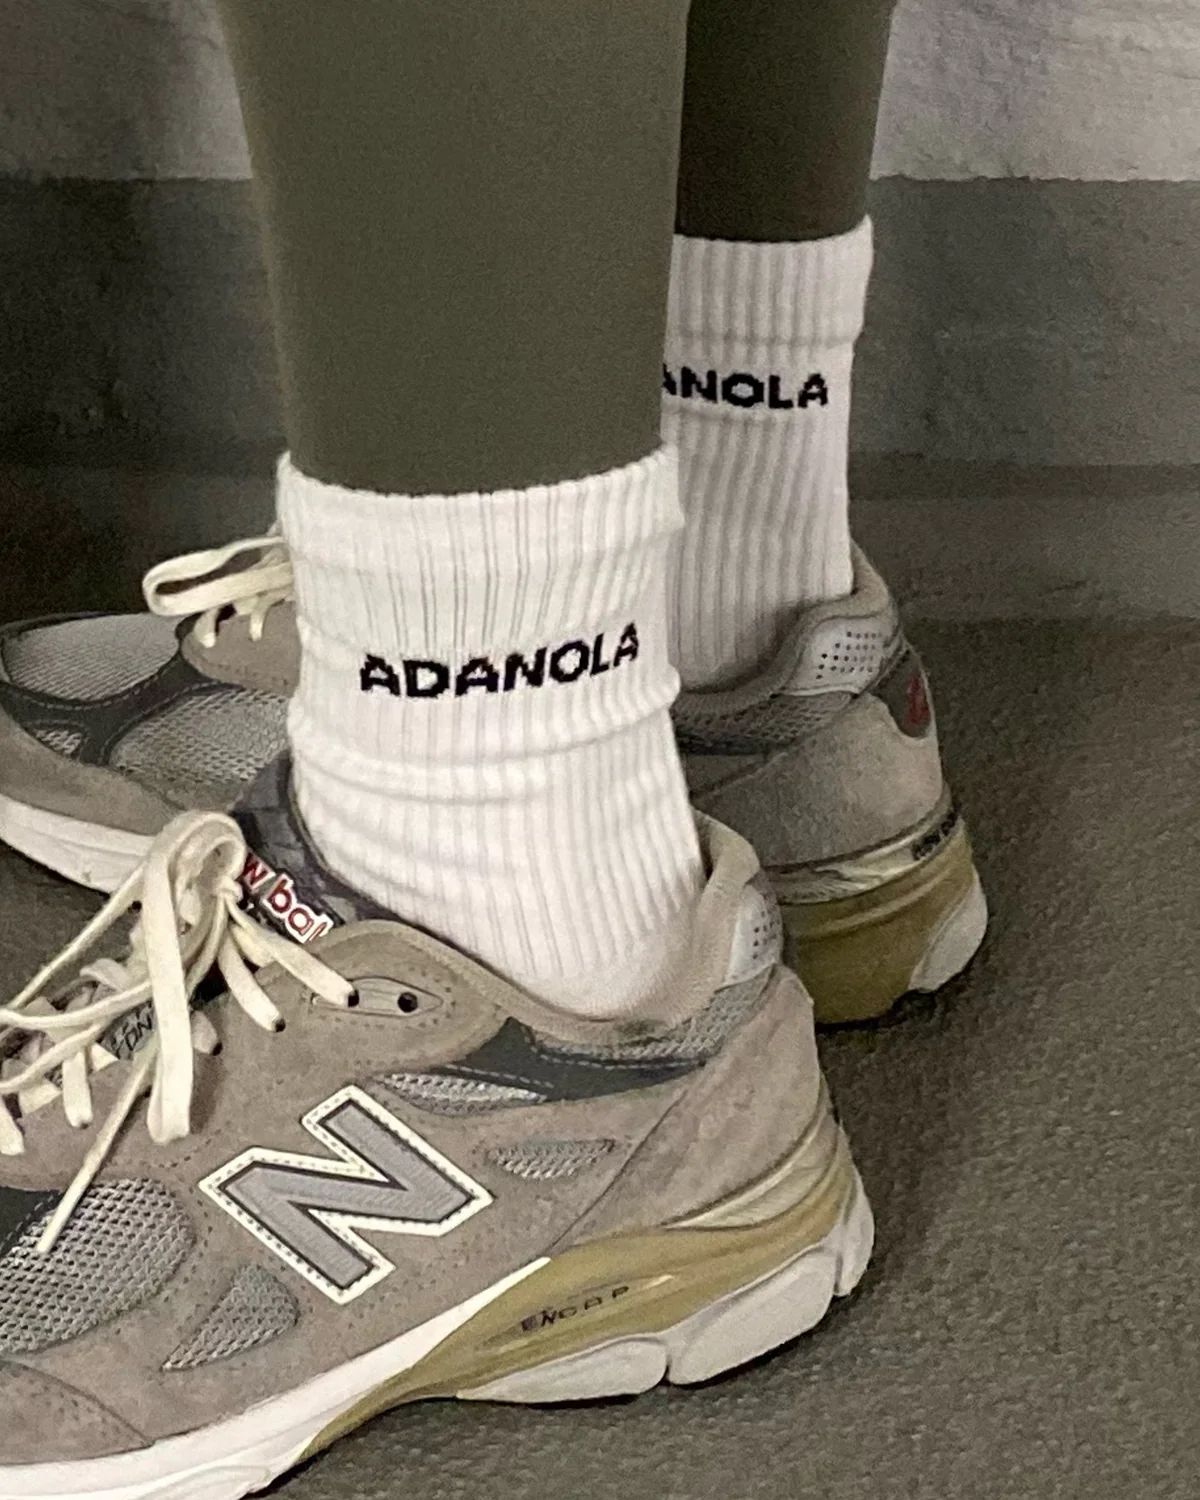 Socks - White | Adanola UK